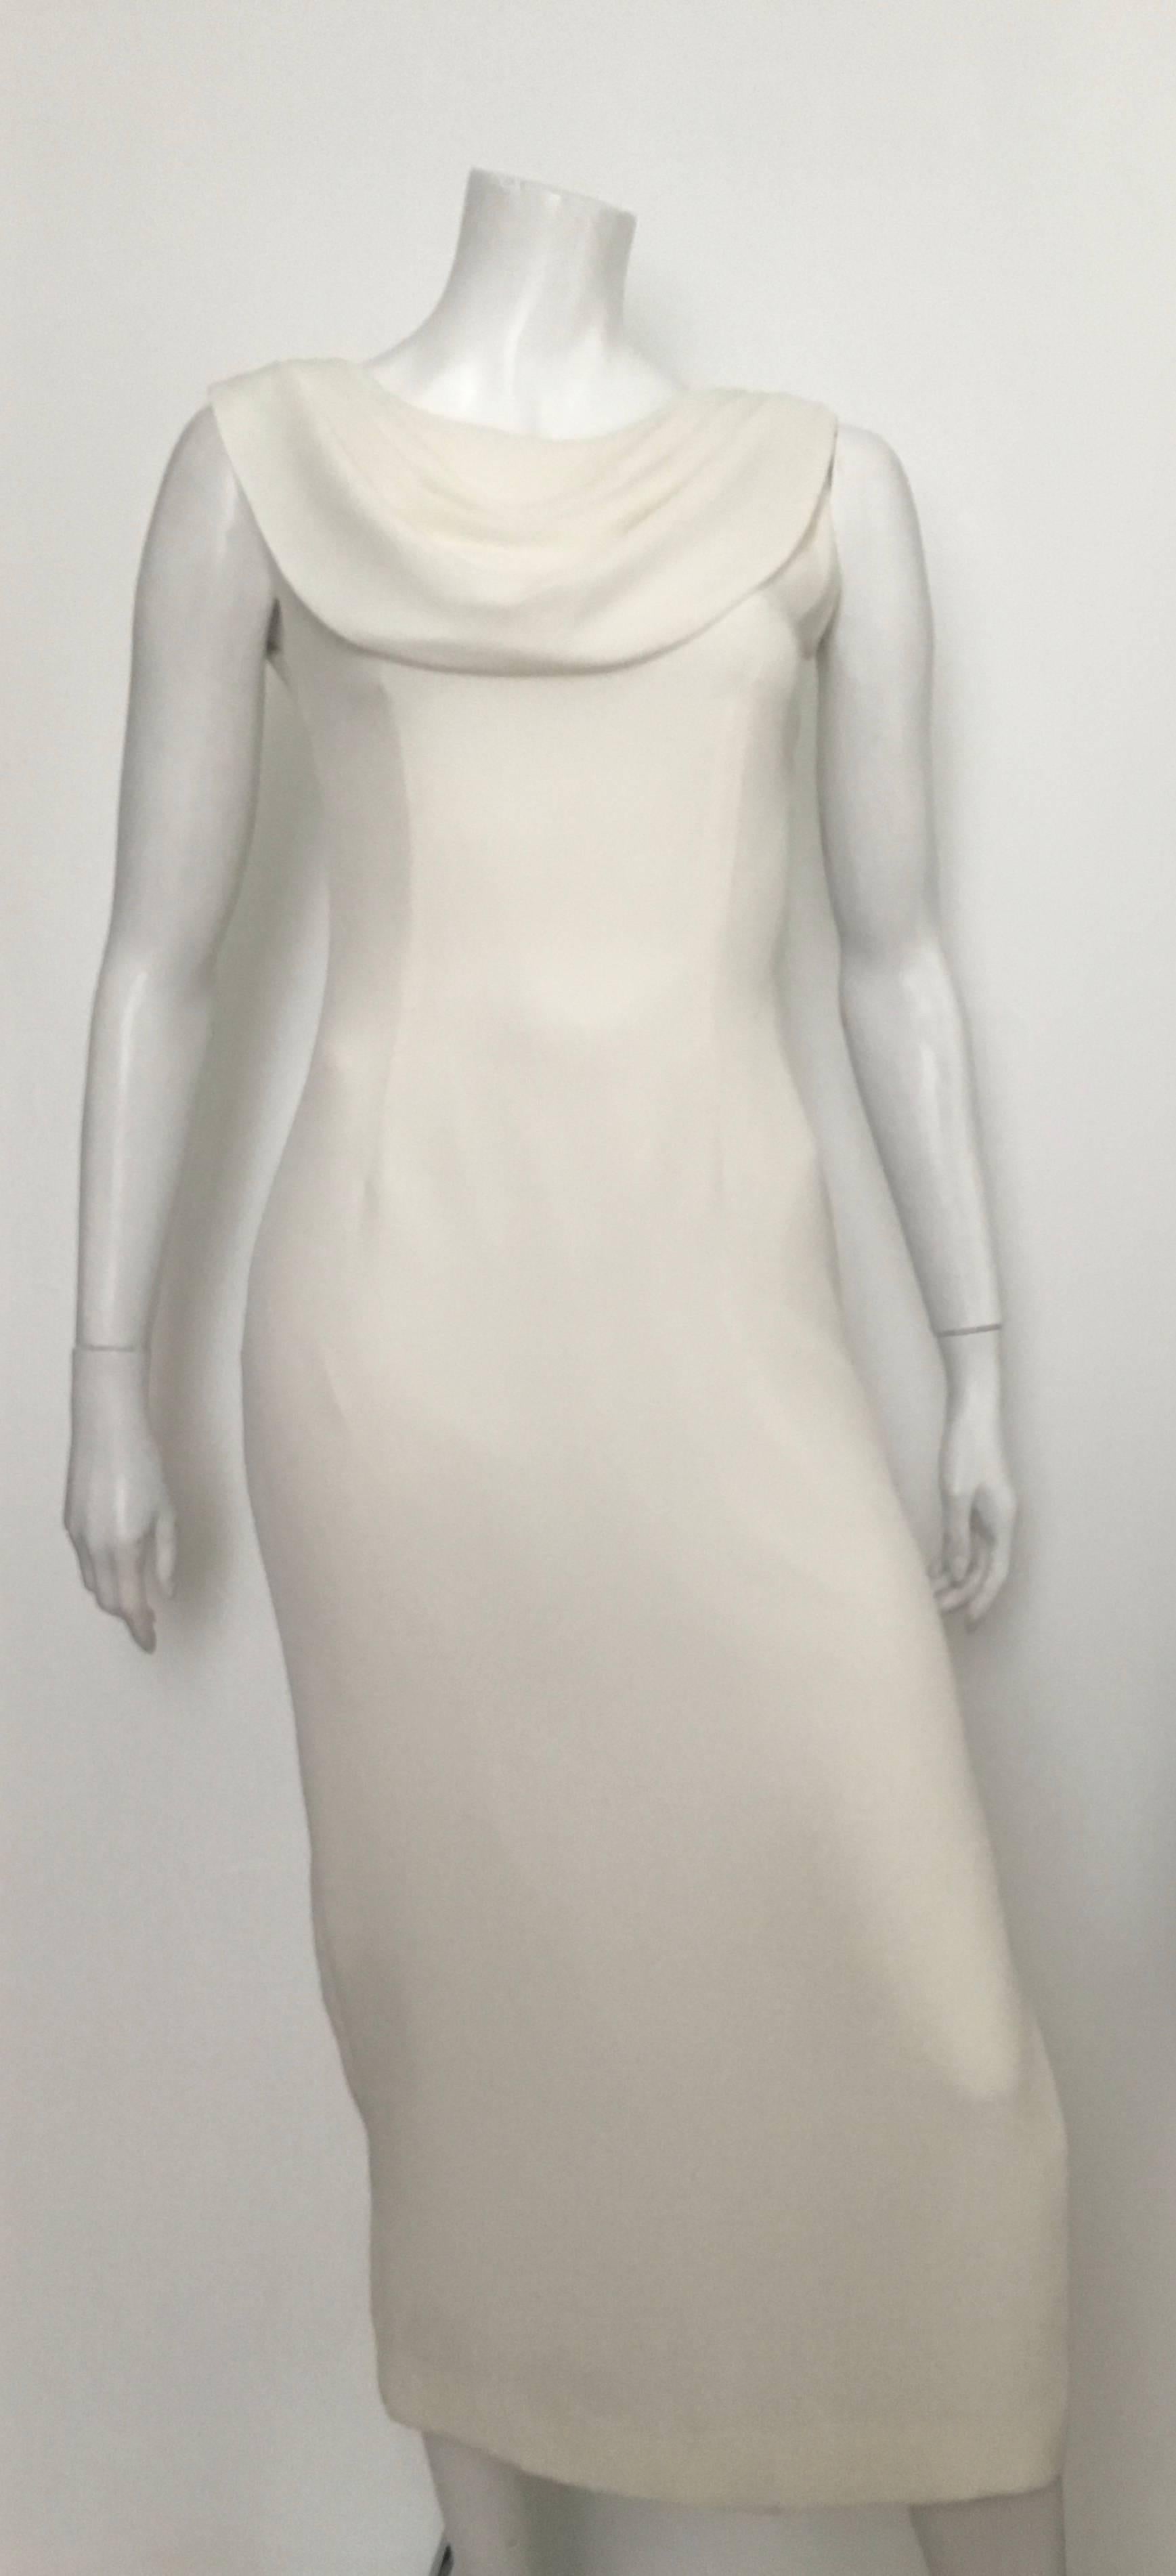 Scaasi Off White Long Sheath Evening Dress Size 4. 6